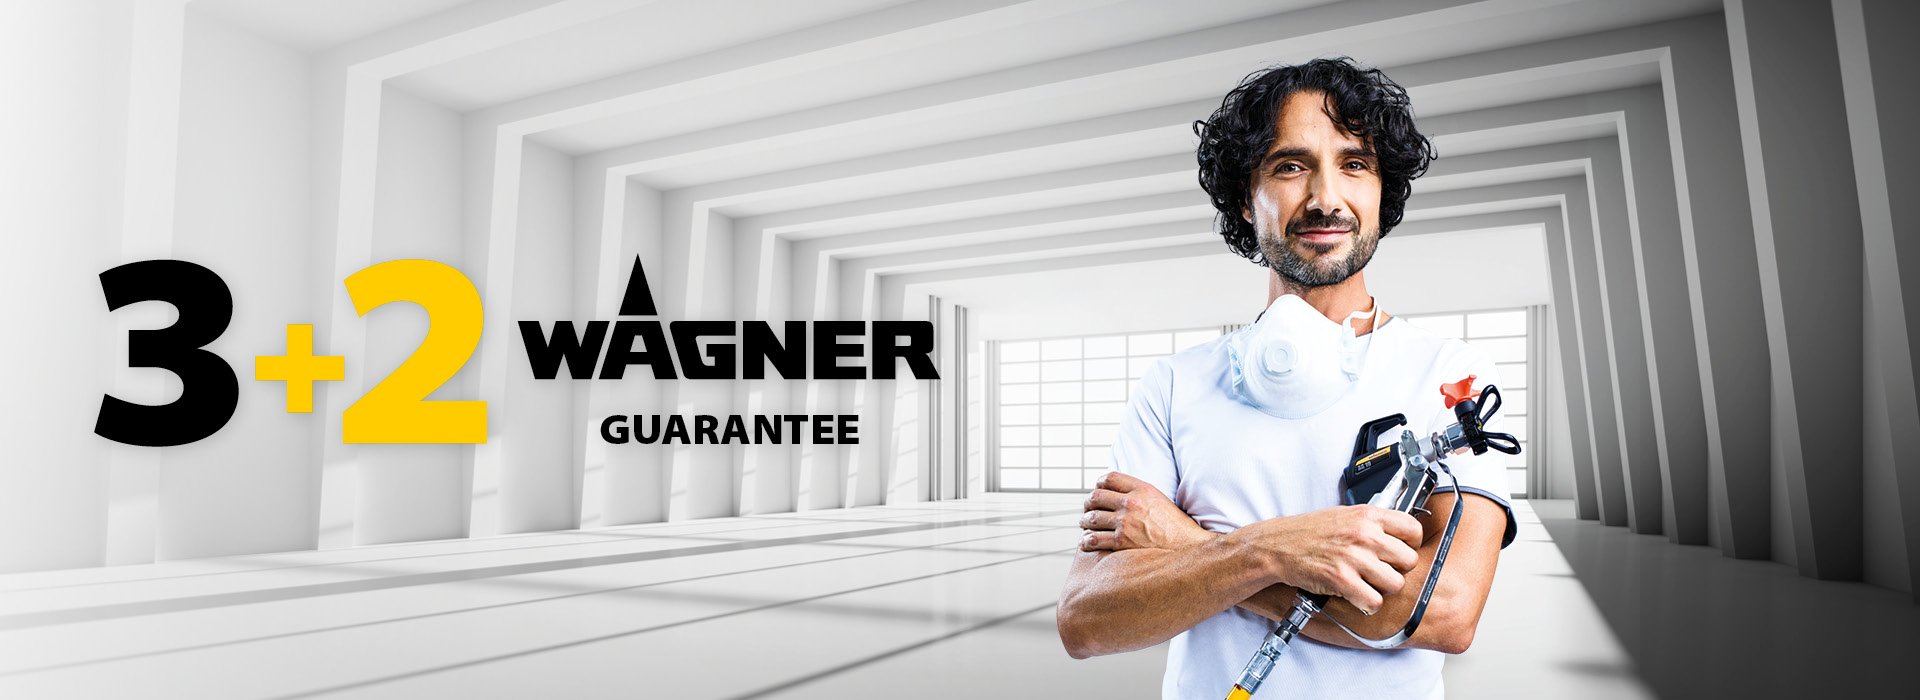 WAGNER Professional guarantee 3+2